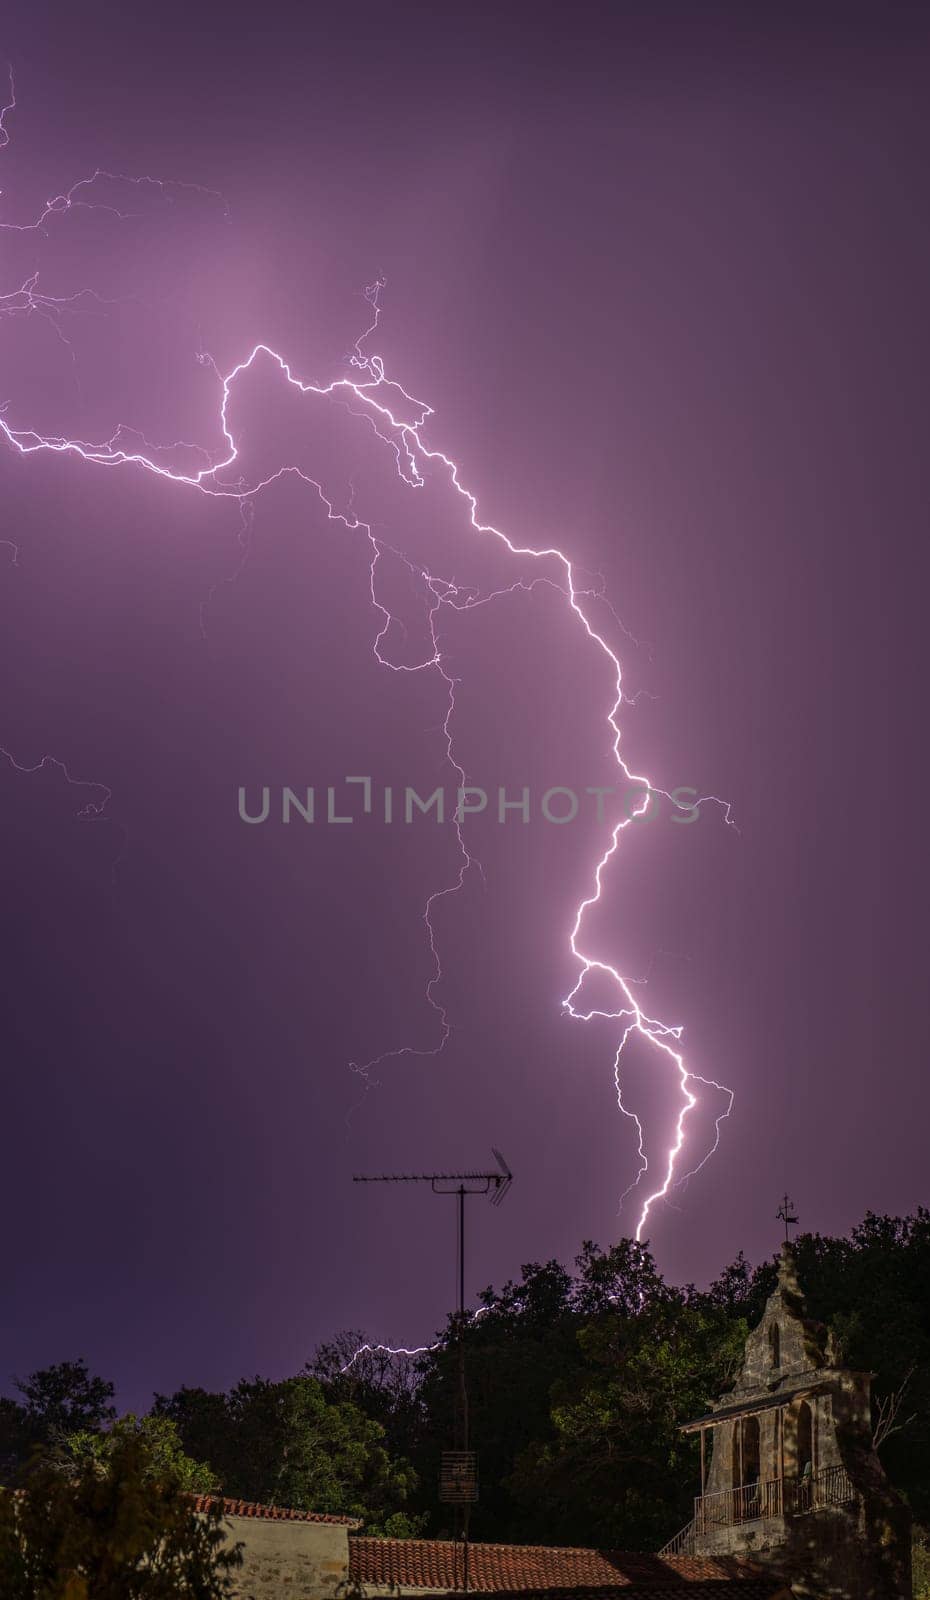 Intense Lightning Strike Over a Small Rural Church by FerradalFCG